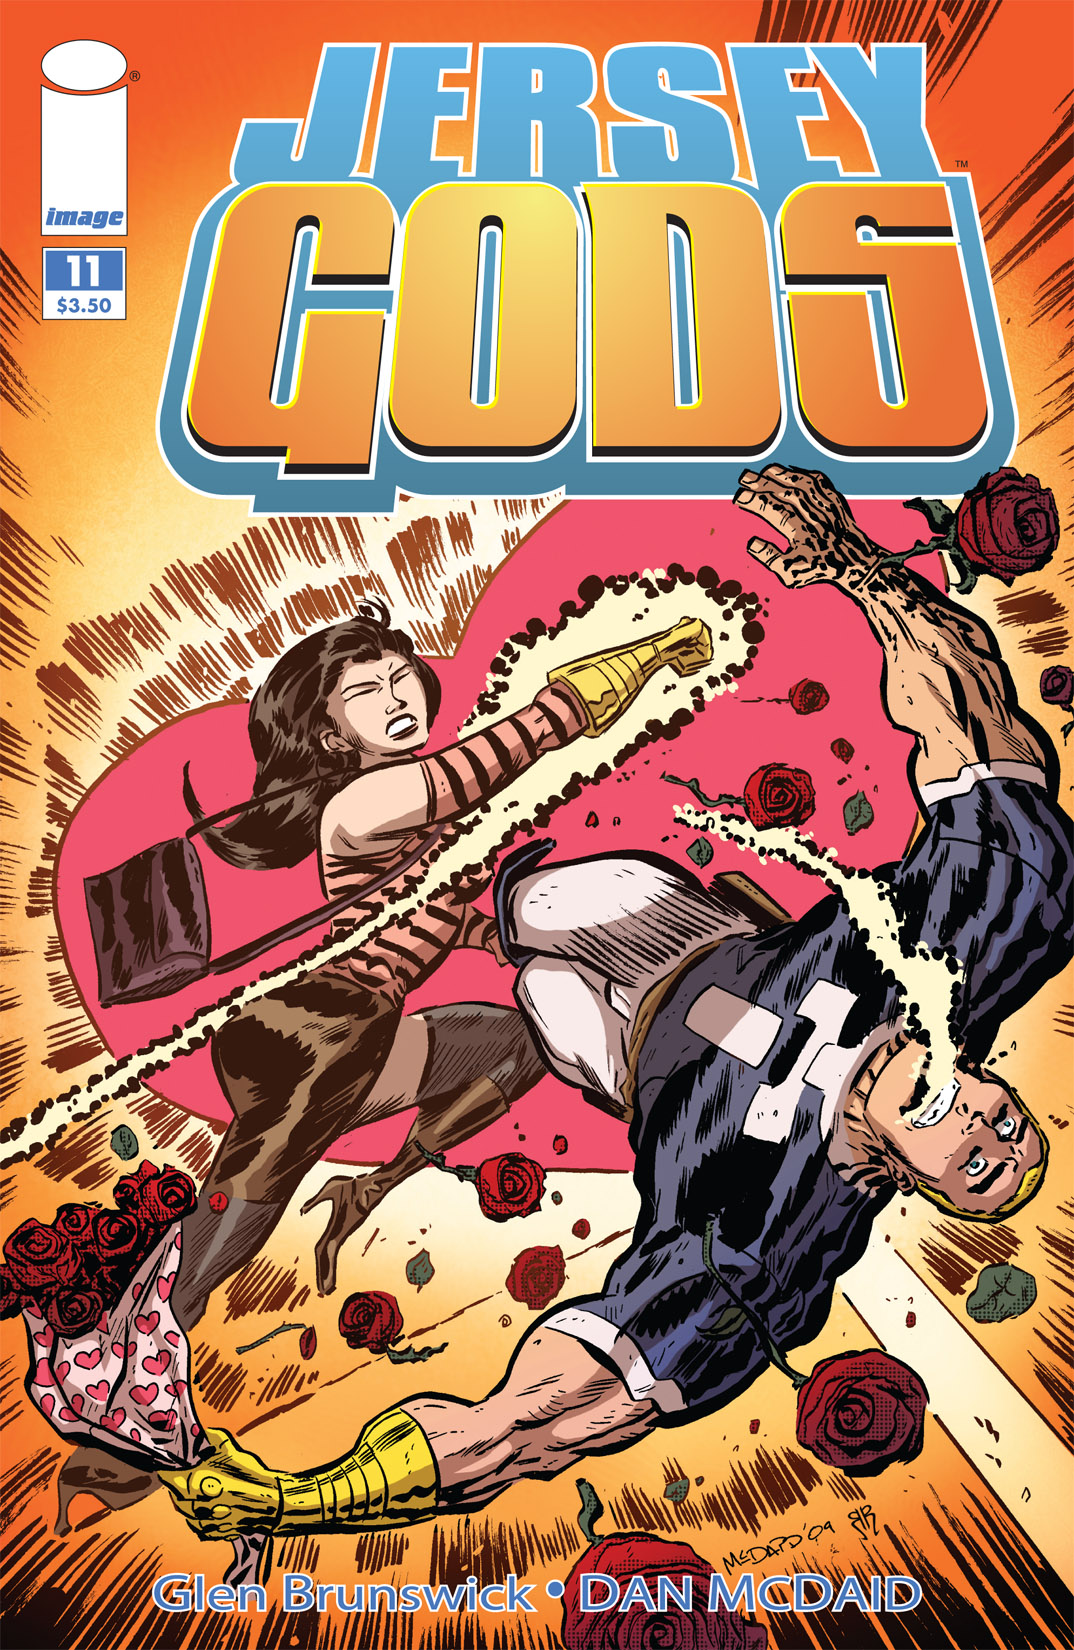 Read online Jersey Gods comic -  Issue #11 - 1